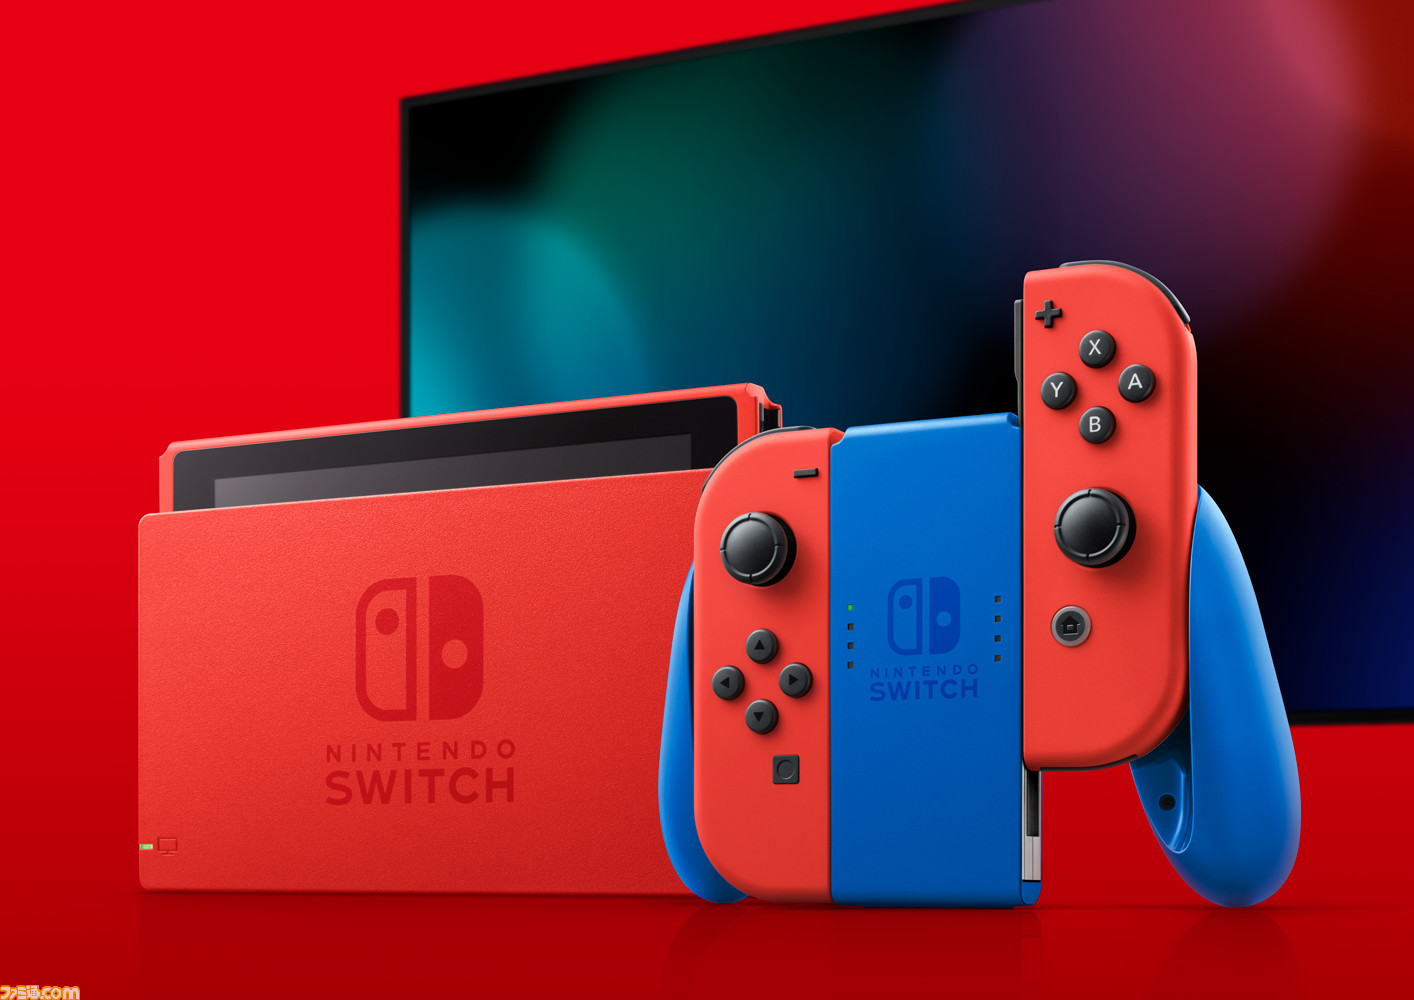 Nintendo Switch ニンテンドースイッチ　限定カラー